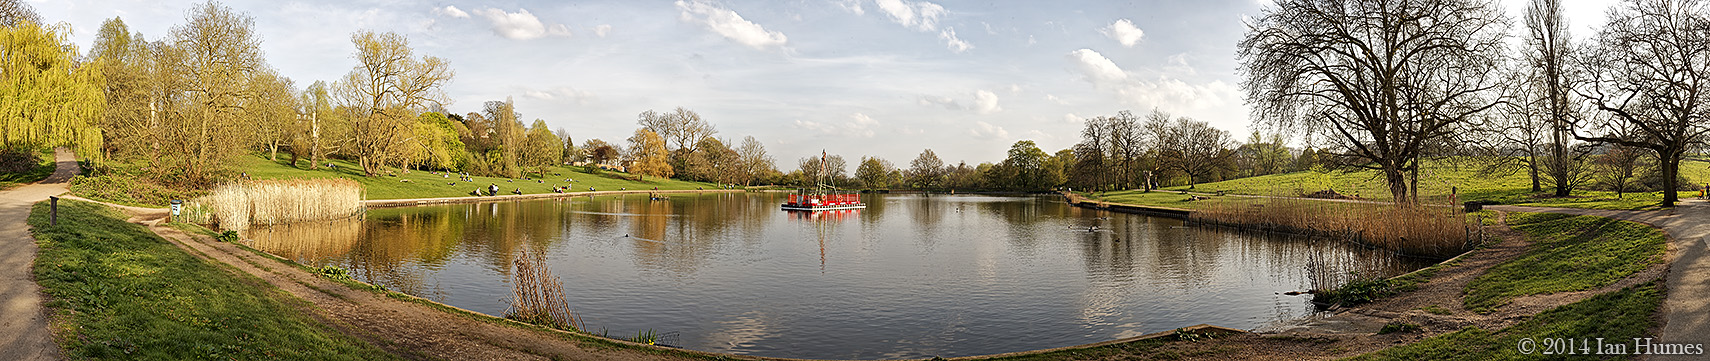 The Model Boating Pond - Hampstead Heath